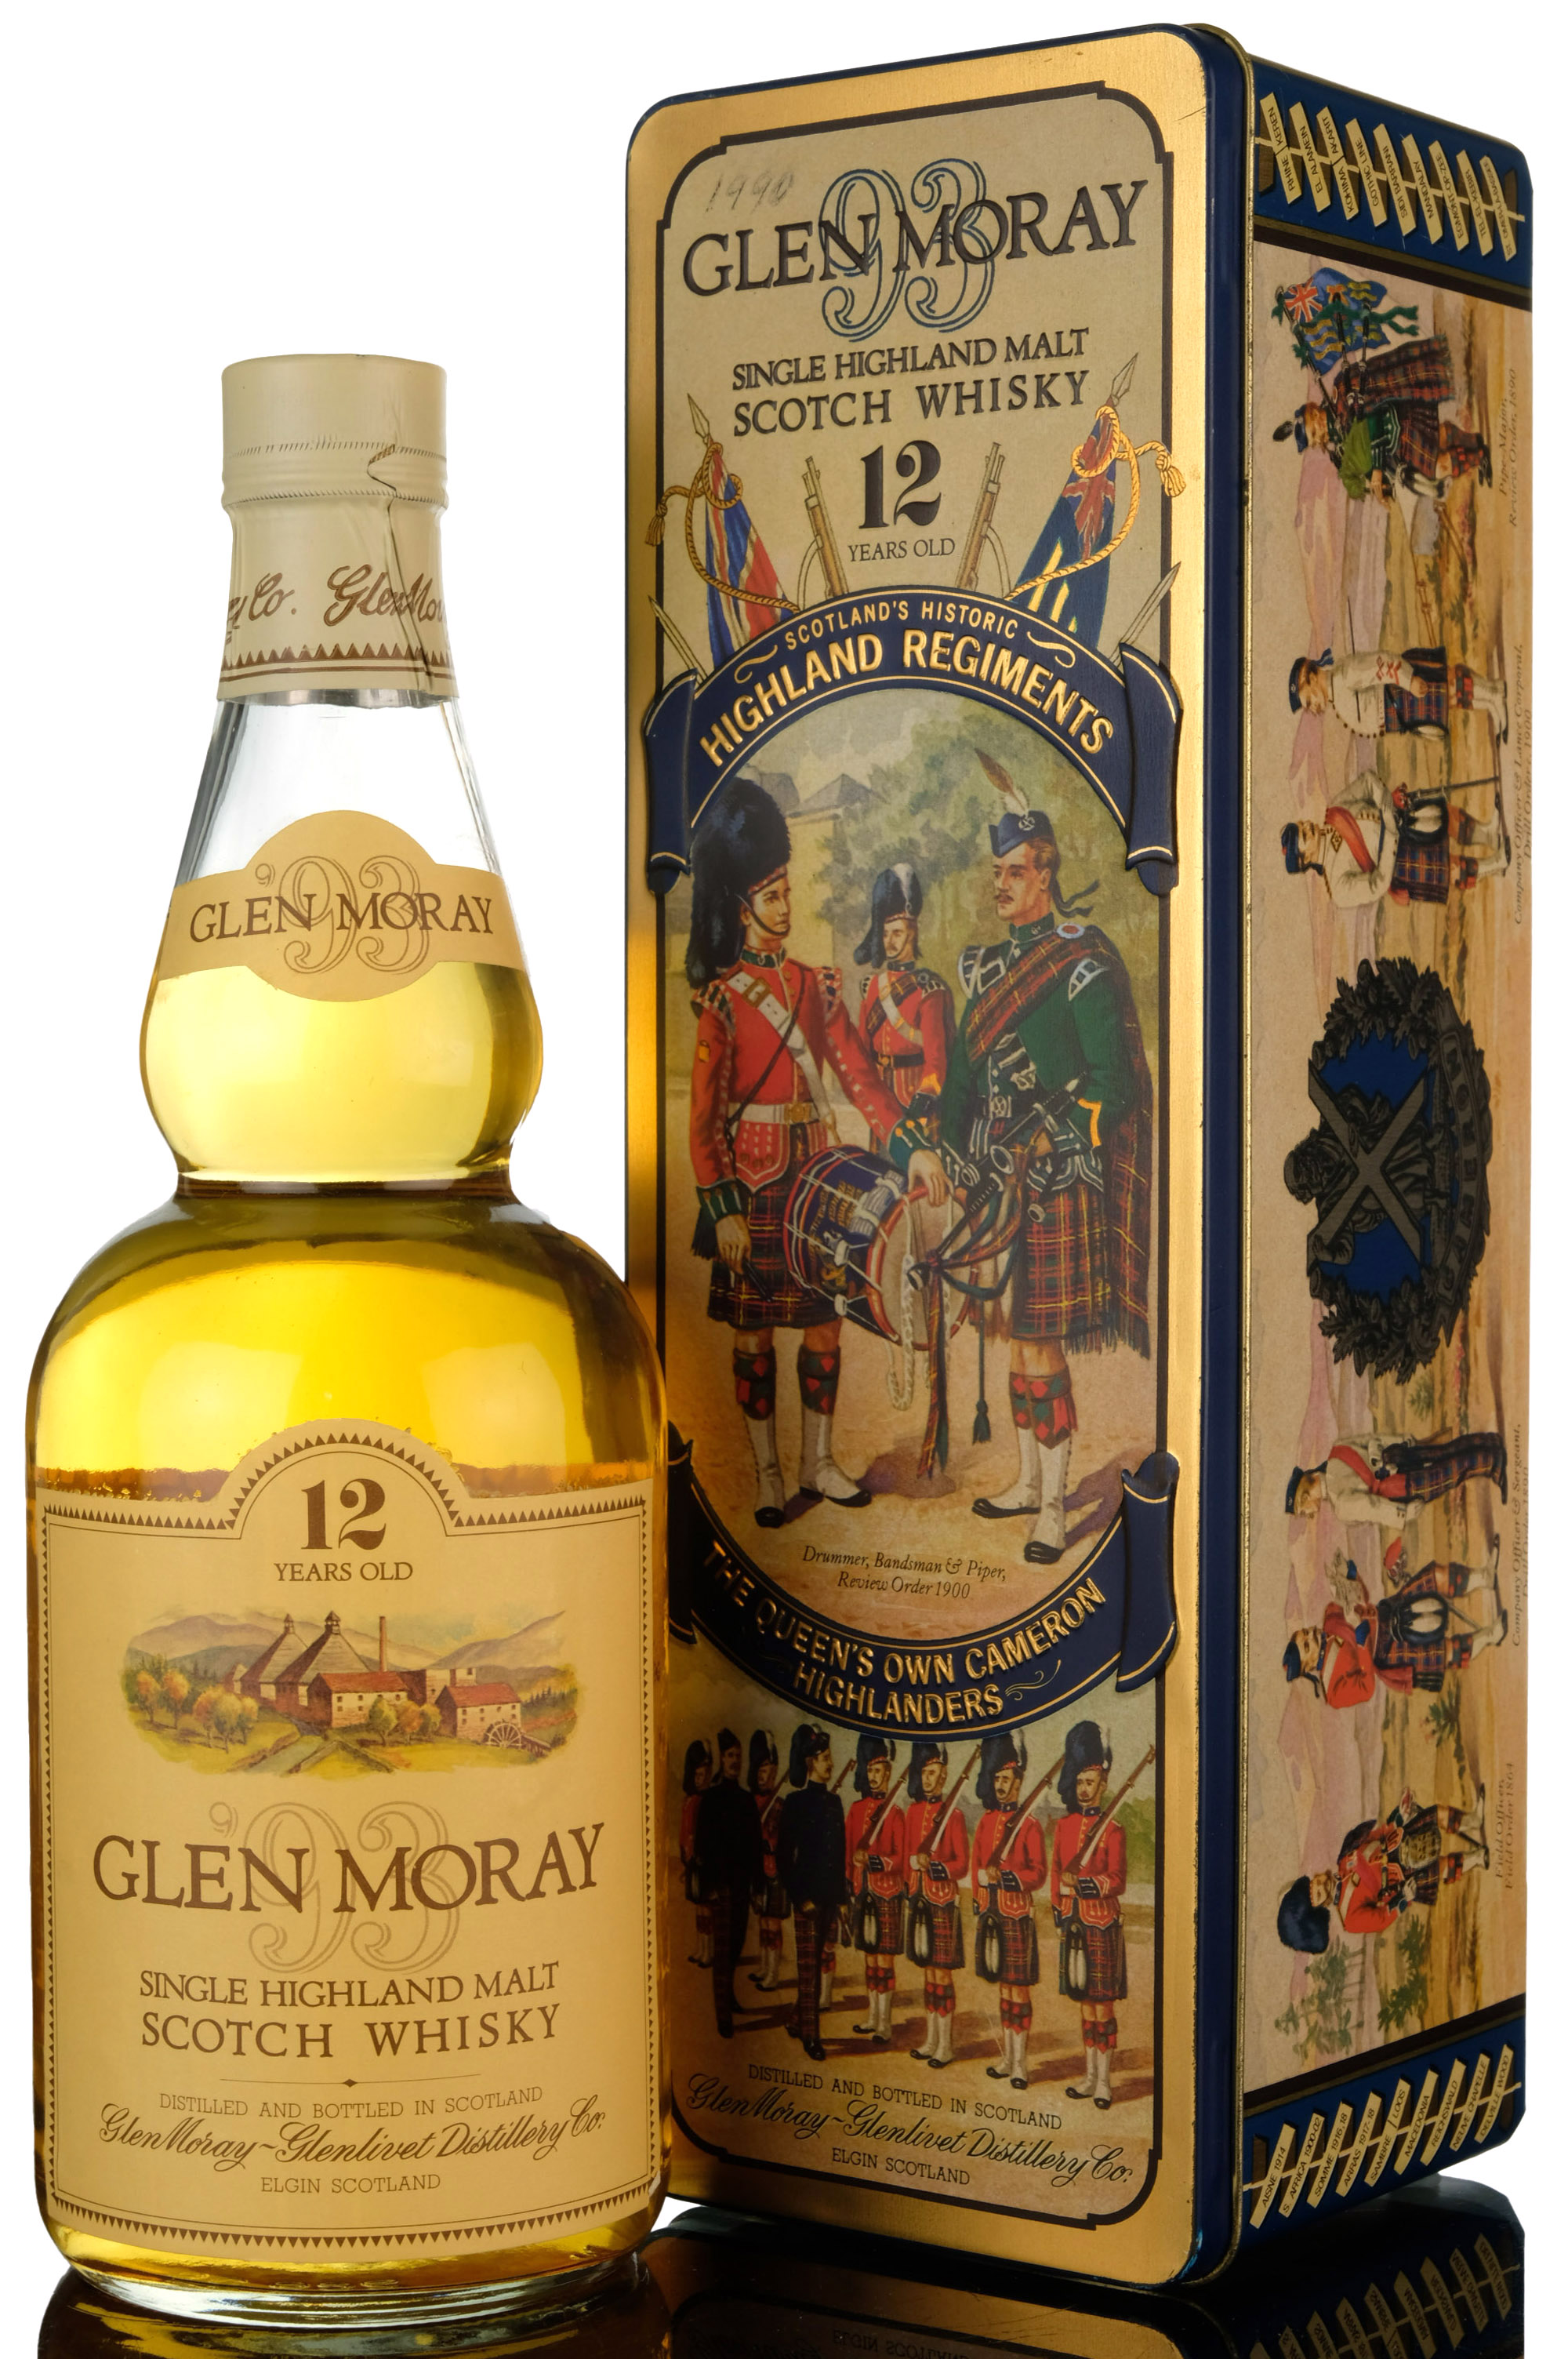 Glen Moray 12 Year Old - Circa 1990 - The Queen's Own Cameron Highlanders